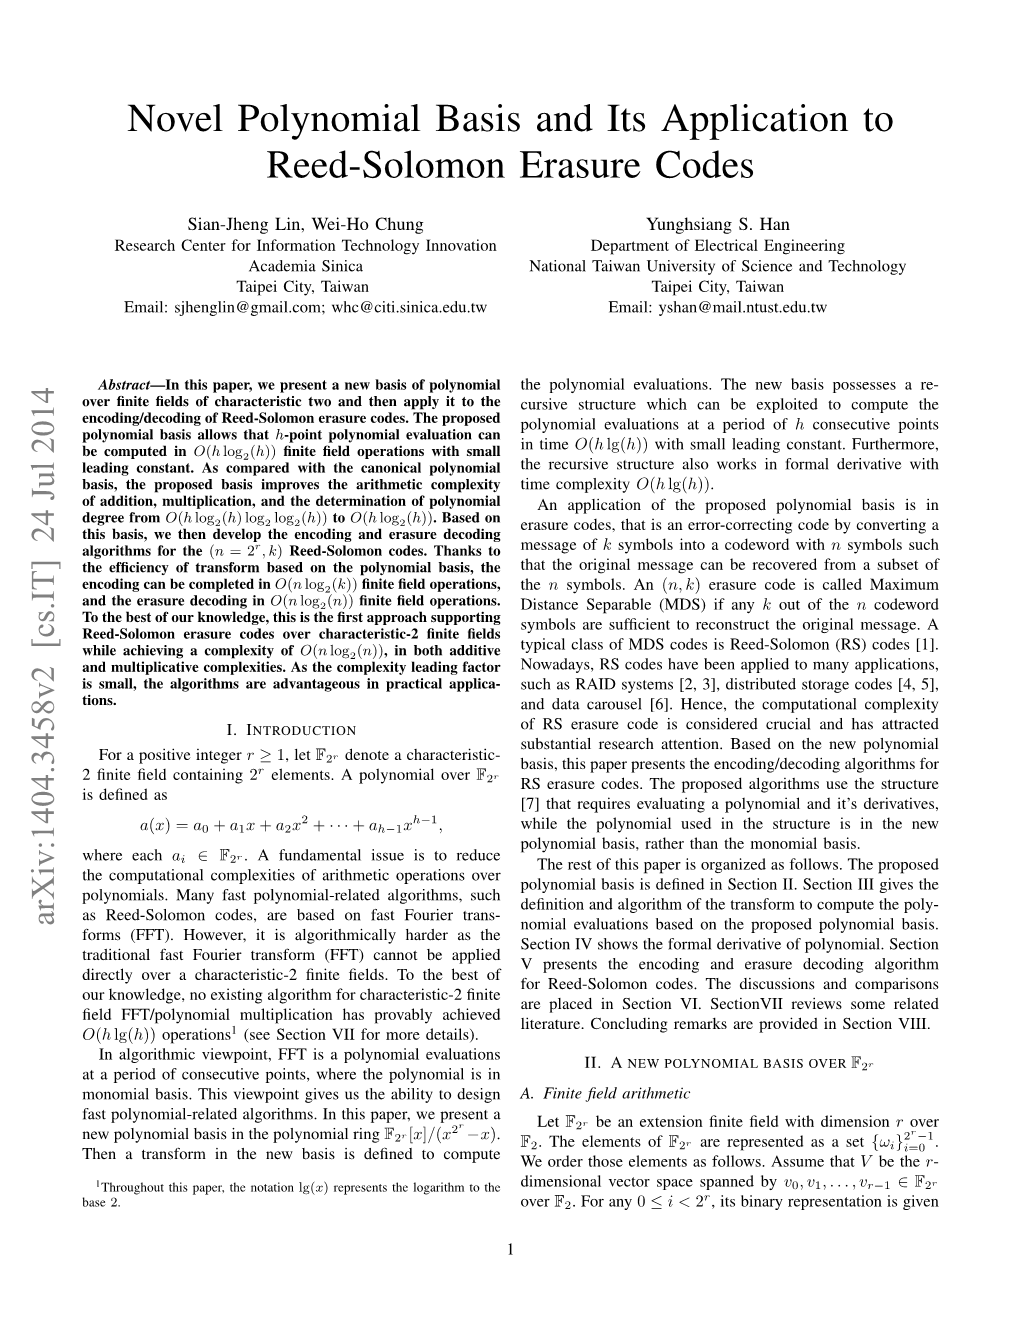 Novel Polynomial Basis and Its Application to Reed-Solomon Erasure Codes